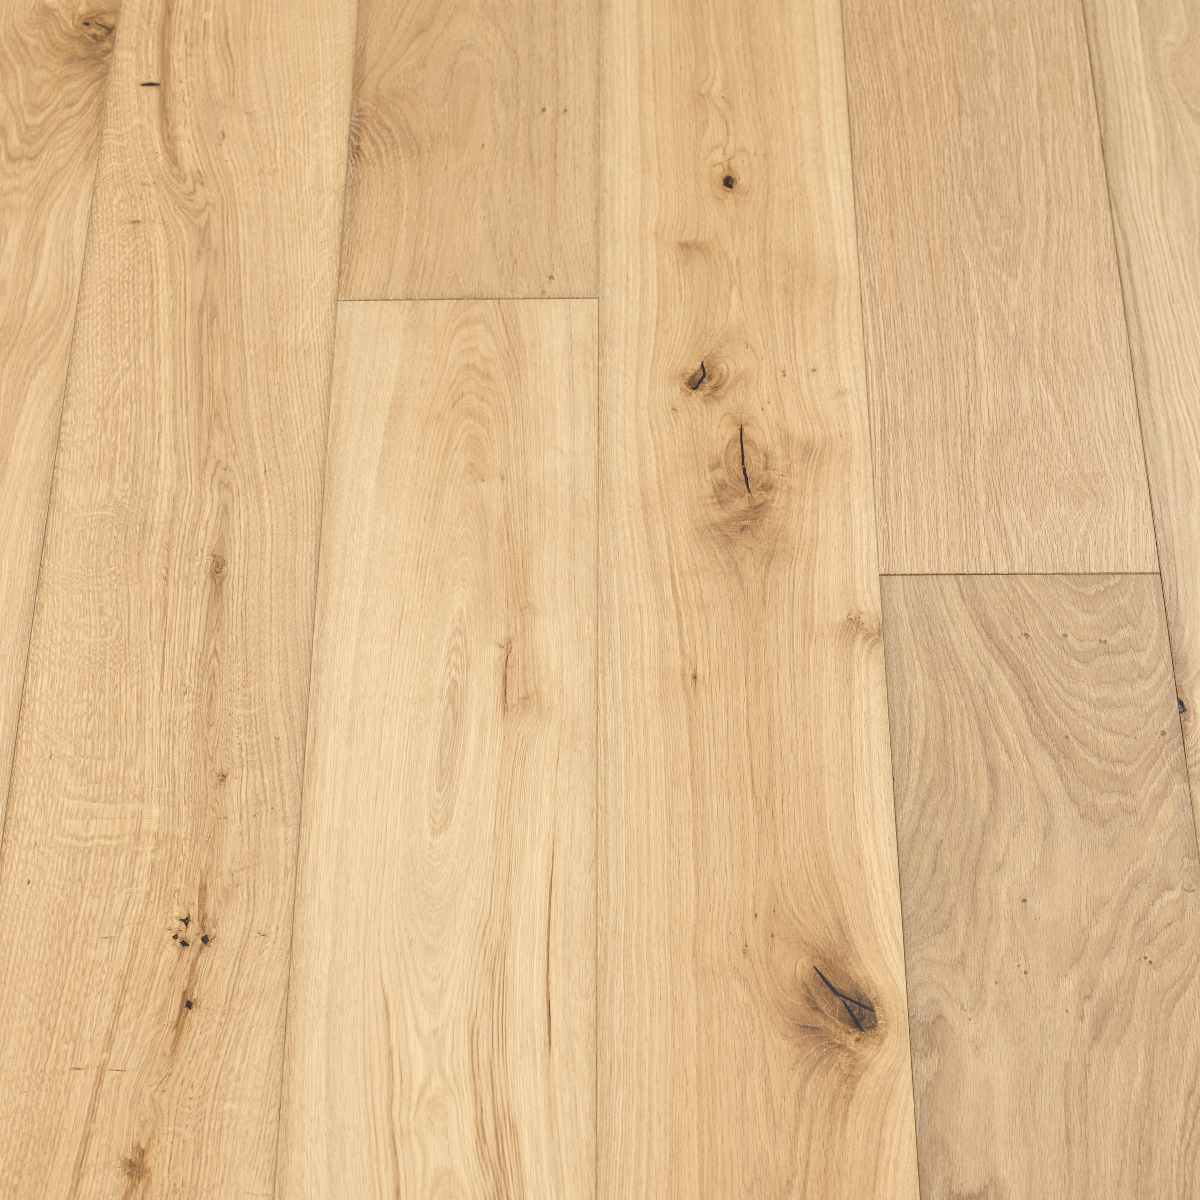 Satin 5% 190mm x 18mm x 1900mm Bespoke Wood Flooring